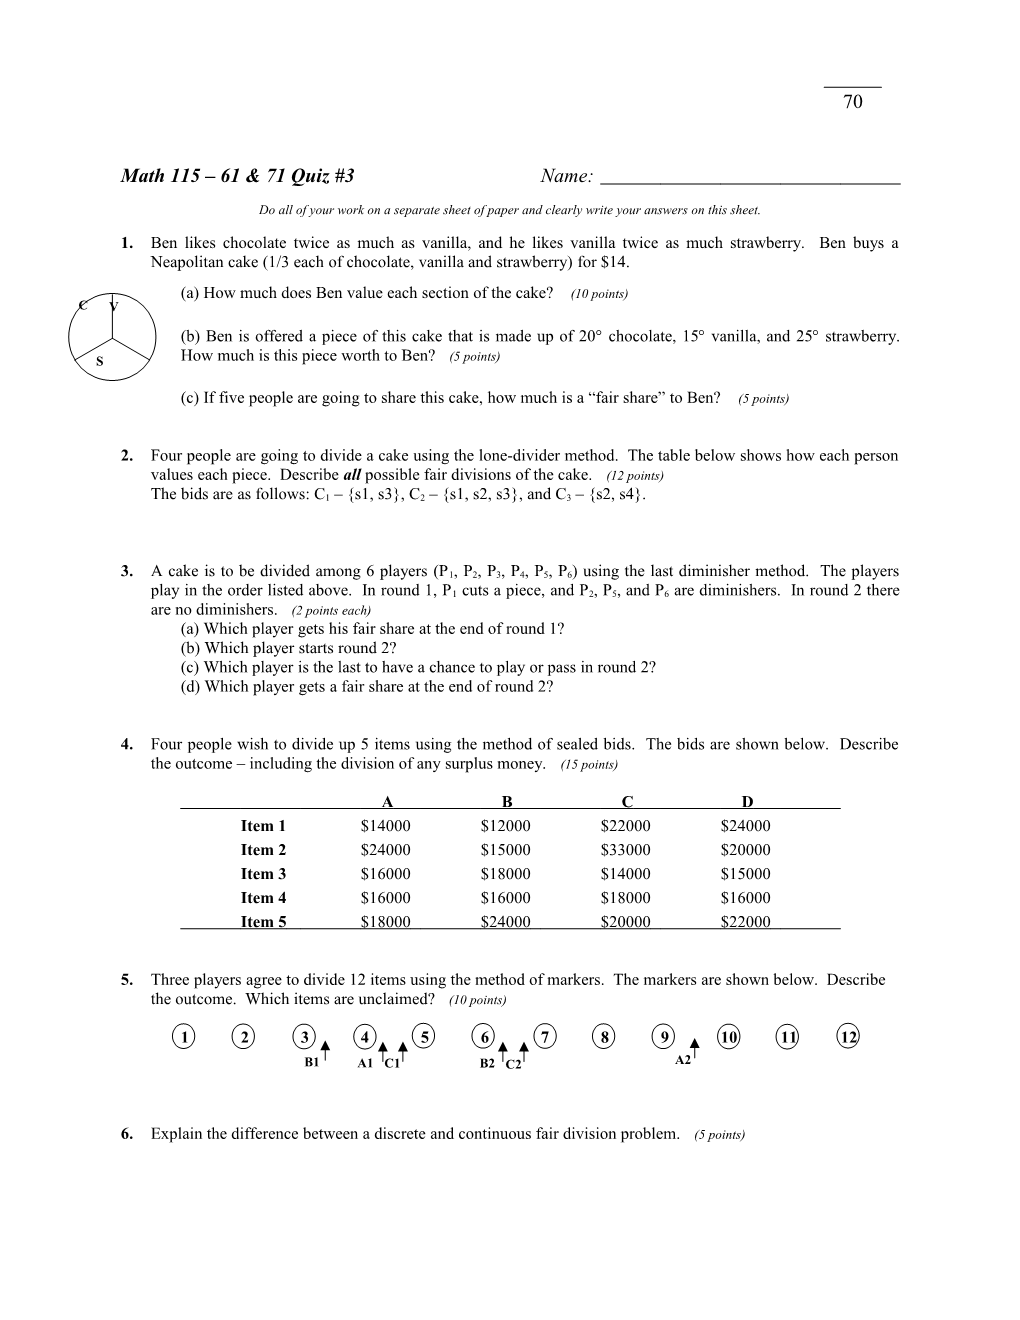 Math 115 61 & 71 Quiz #3 Name